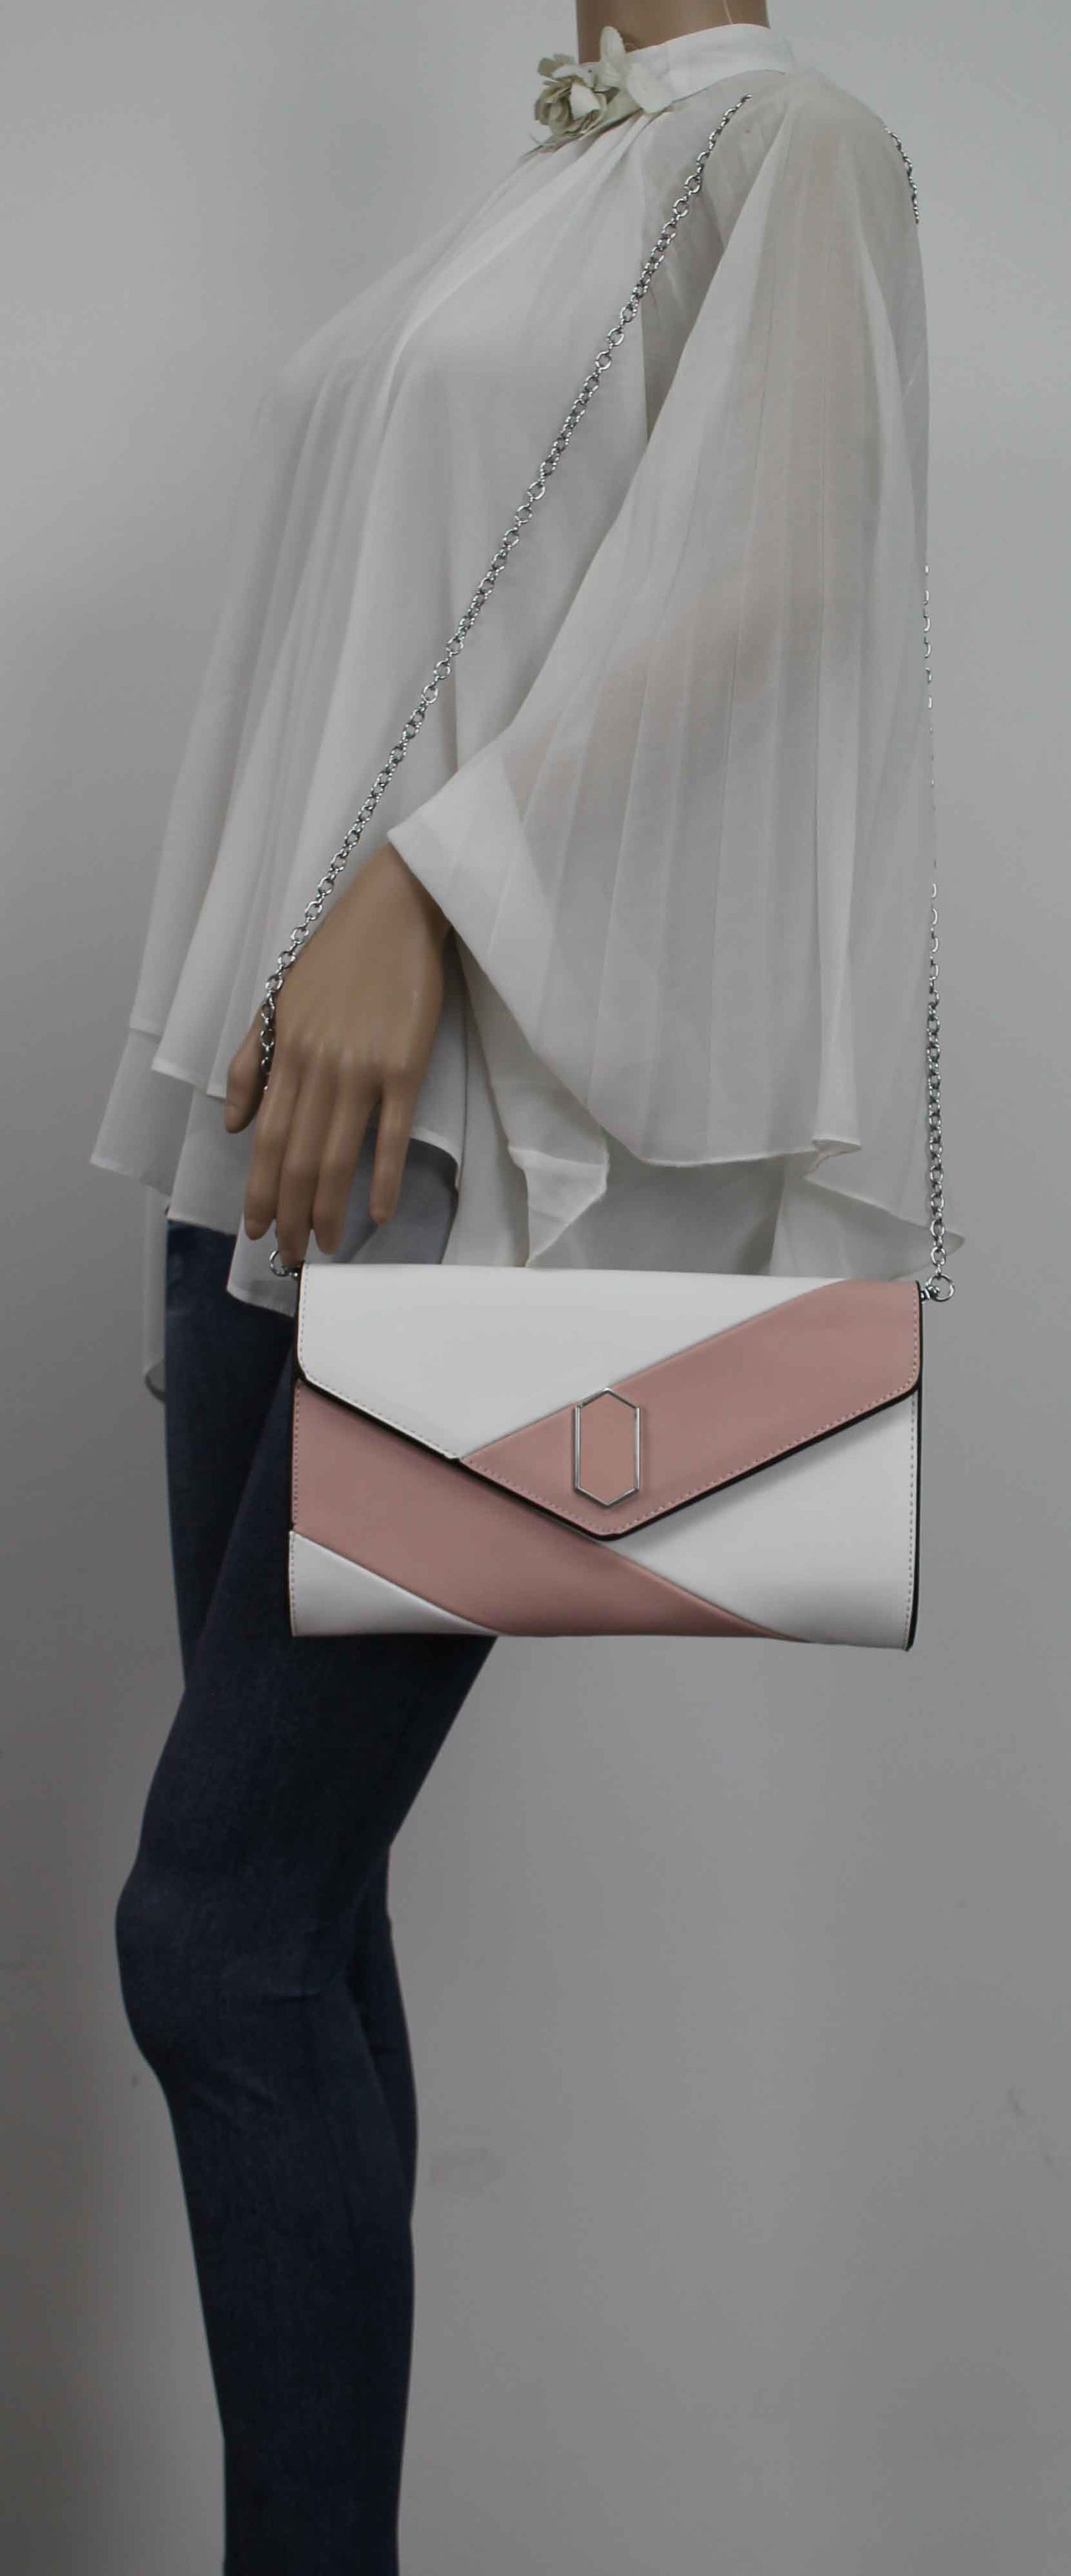 SWANKYSWANS Sara Clutch Bag Pink Cute Cheap Clutch Bag For Weddings School and Work